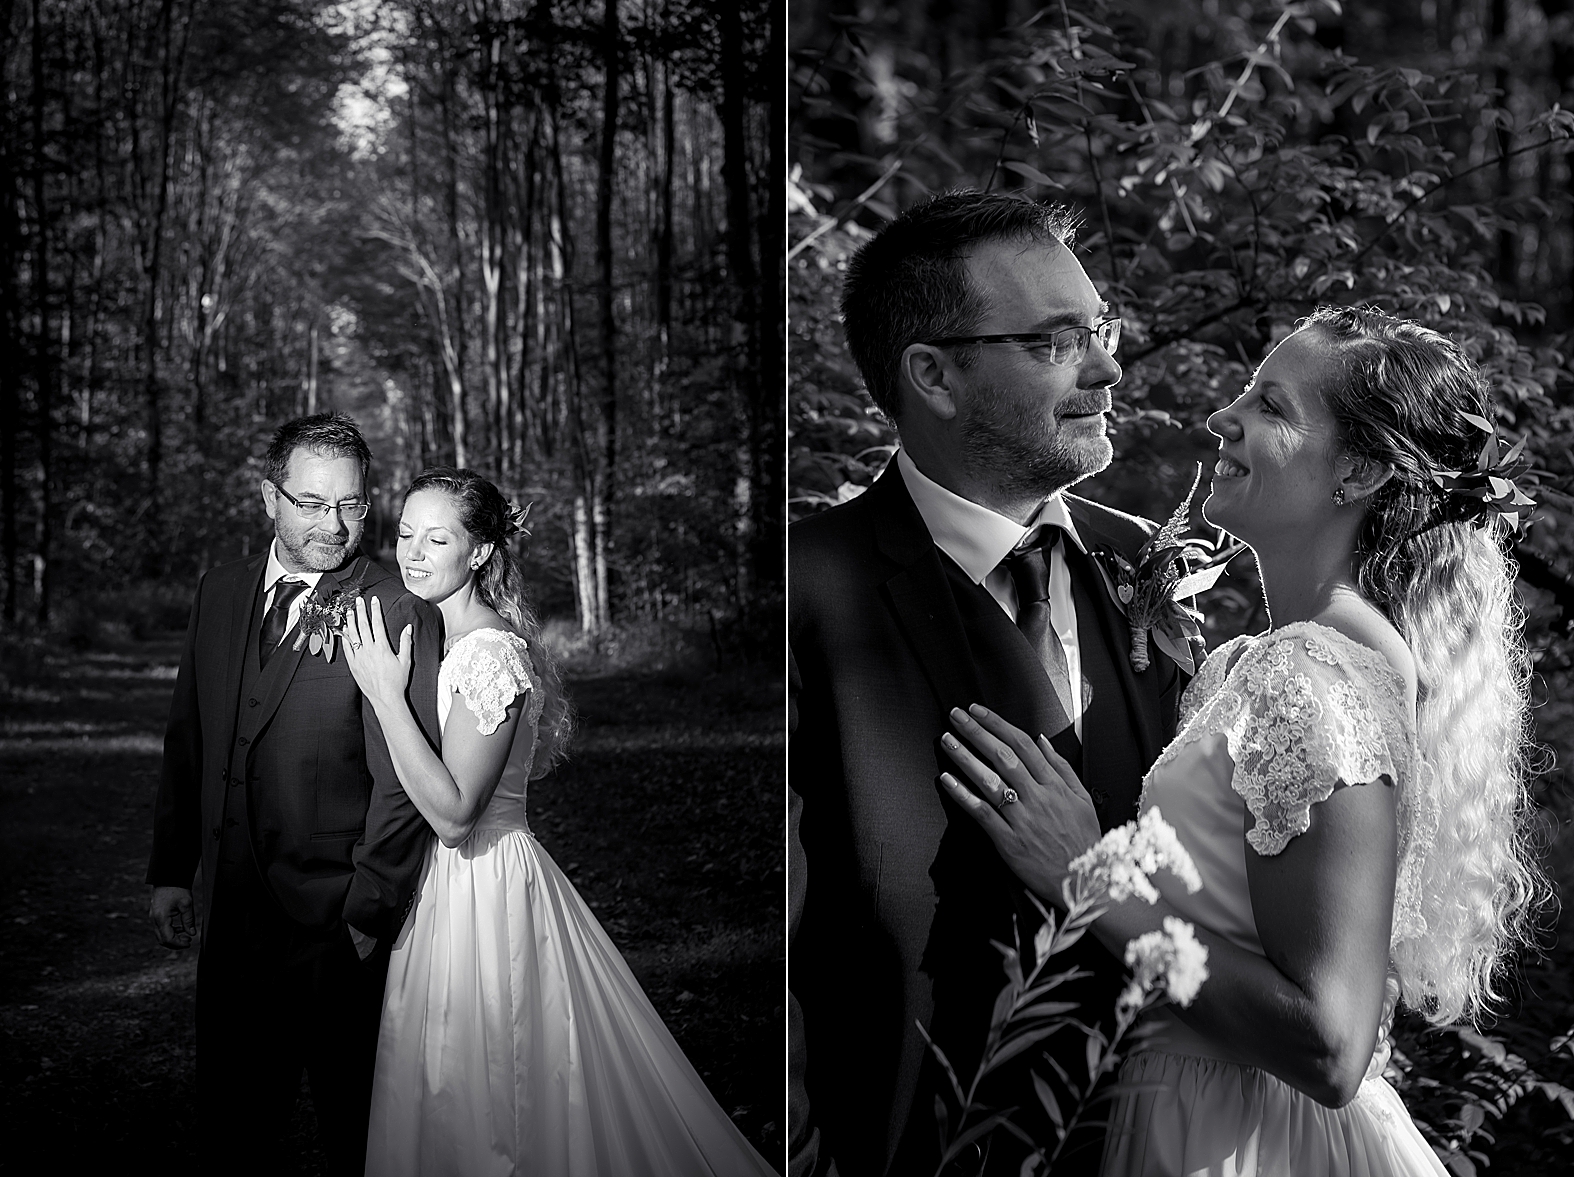 "South Carolina wedding Photographer"